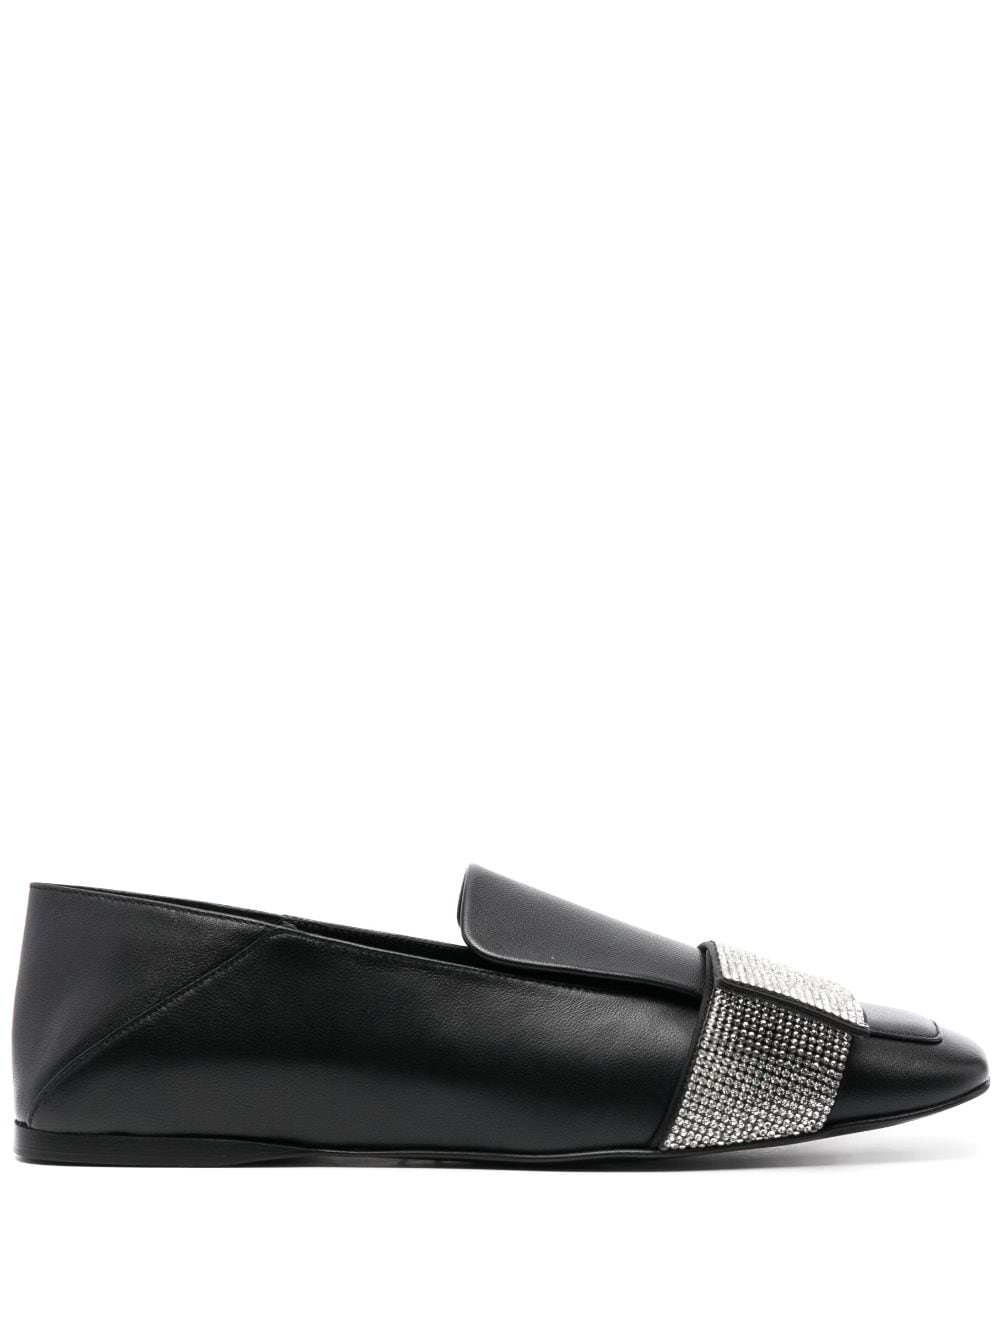 Sergio Rossi crystal-embellished leather ballerina shoes - Black von Sergio Rossi